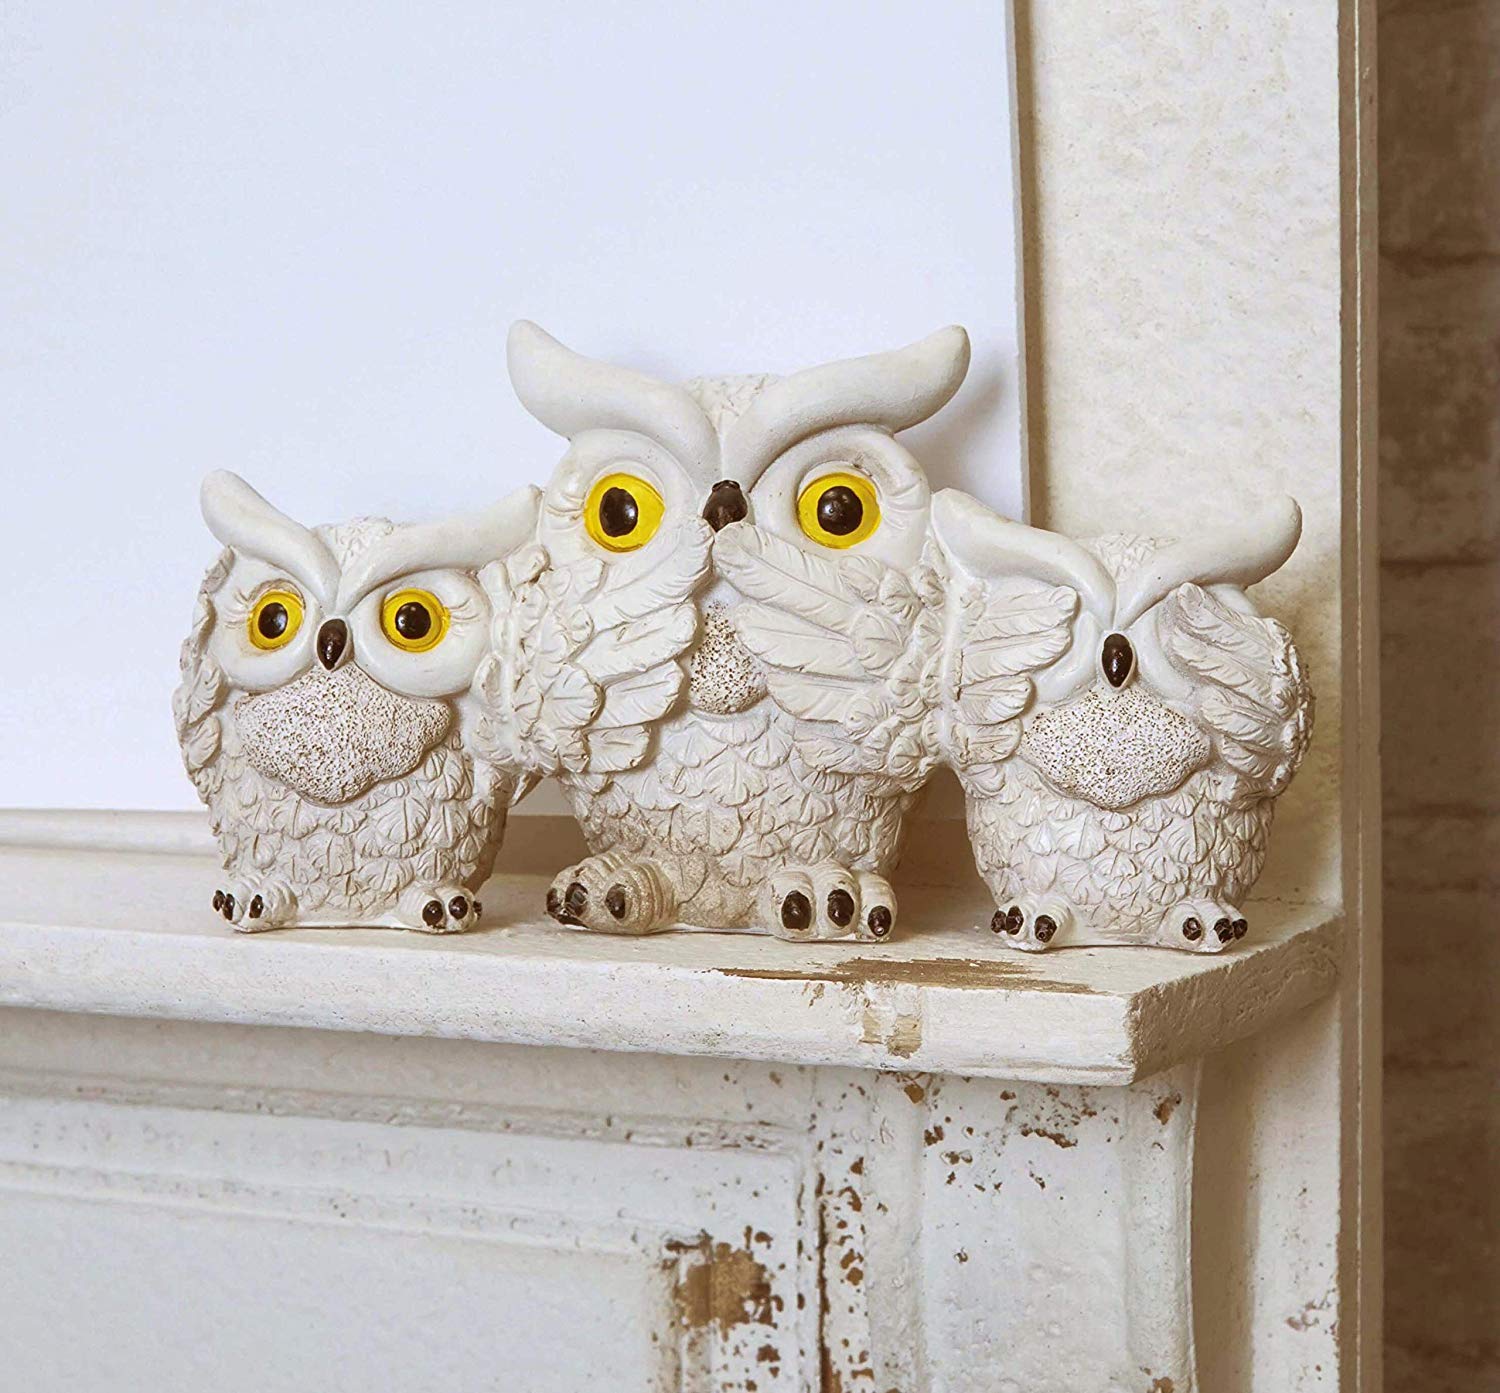 Ebros Gift Ebros See Hear Speak No Evil Wise Acrobatic Fat Owls Figurine 7.25" Wide (Cream)